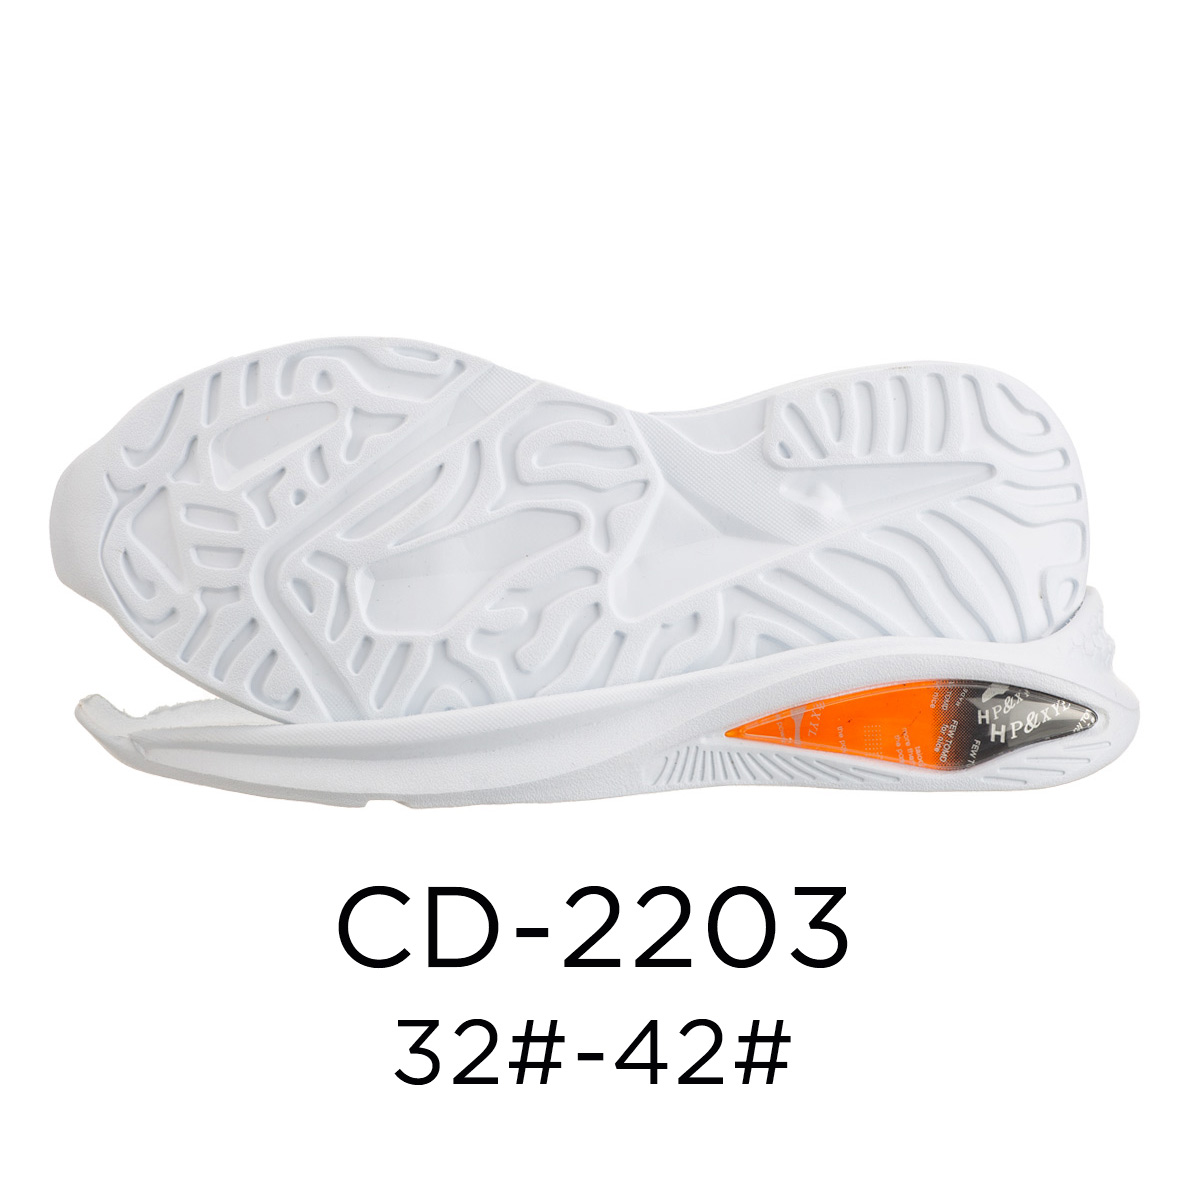 CD-2203